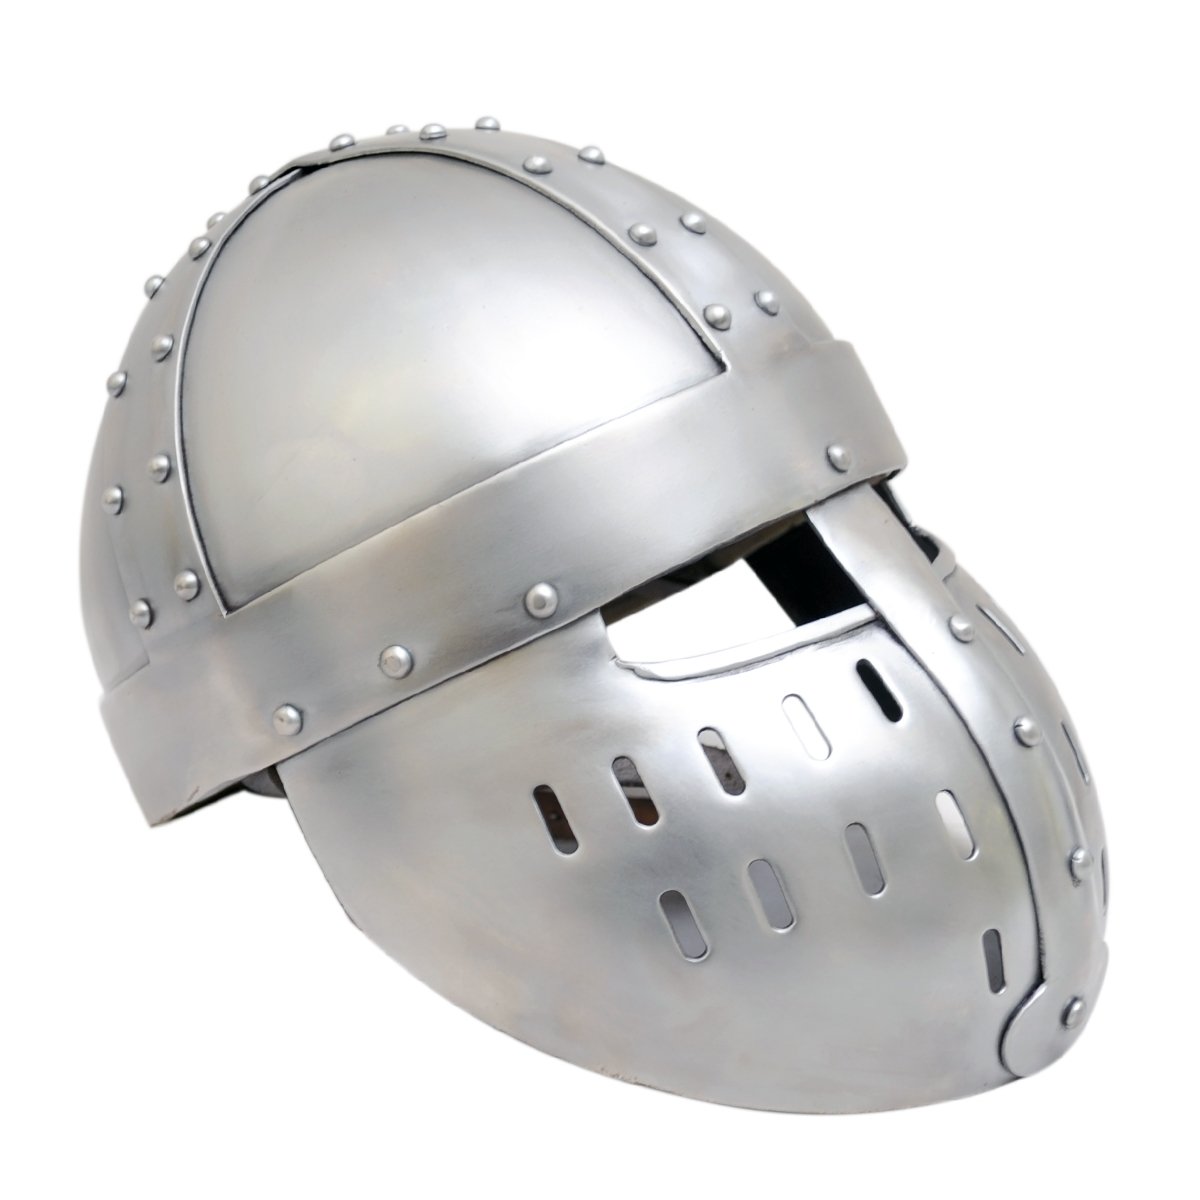 Crusader Face Plate Helmet ( AMENDED )-14 G Steel w/leather liner